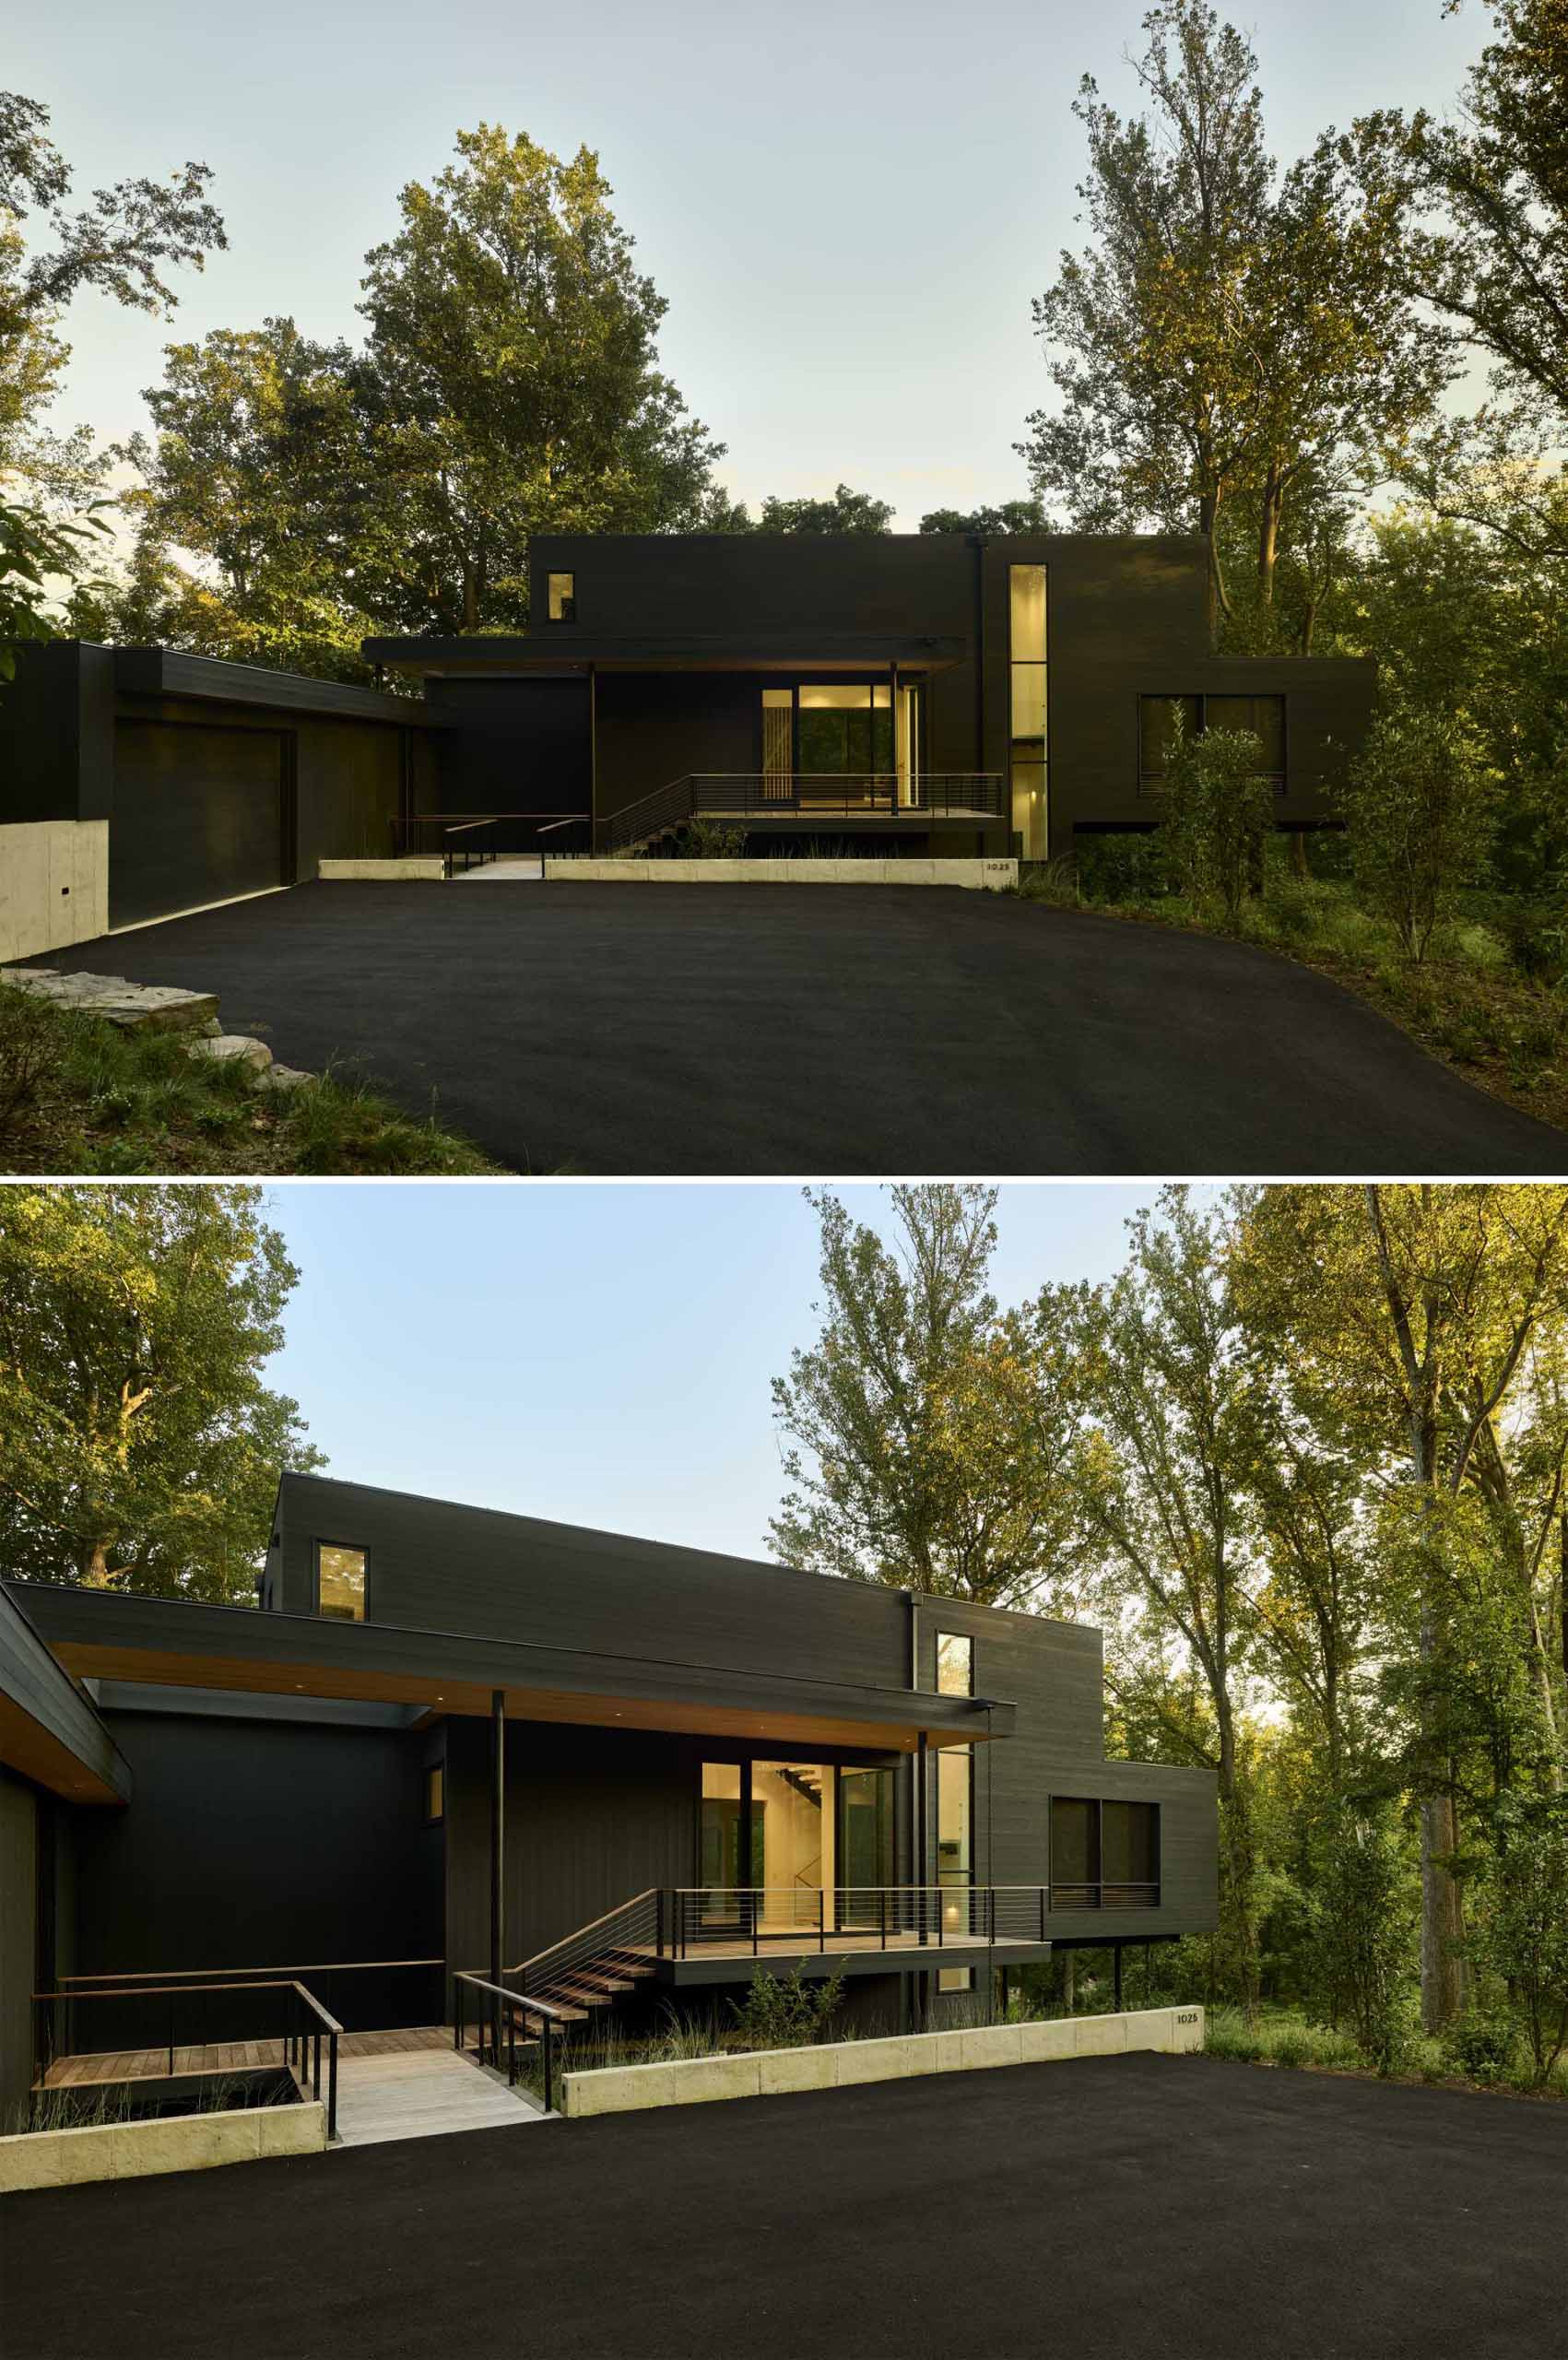 A modern home with a dark wood exterior.